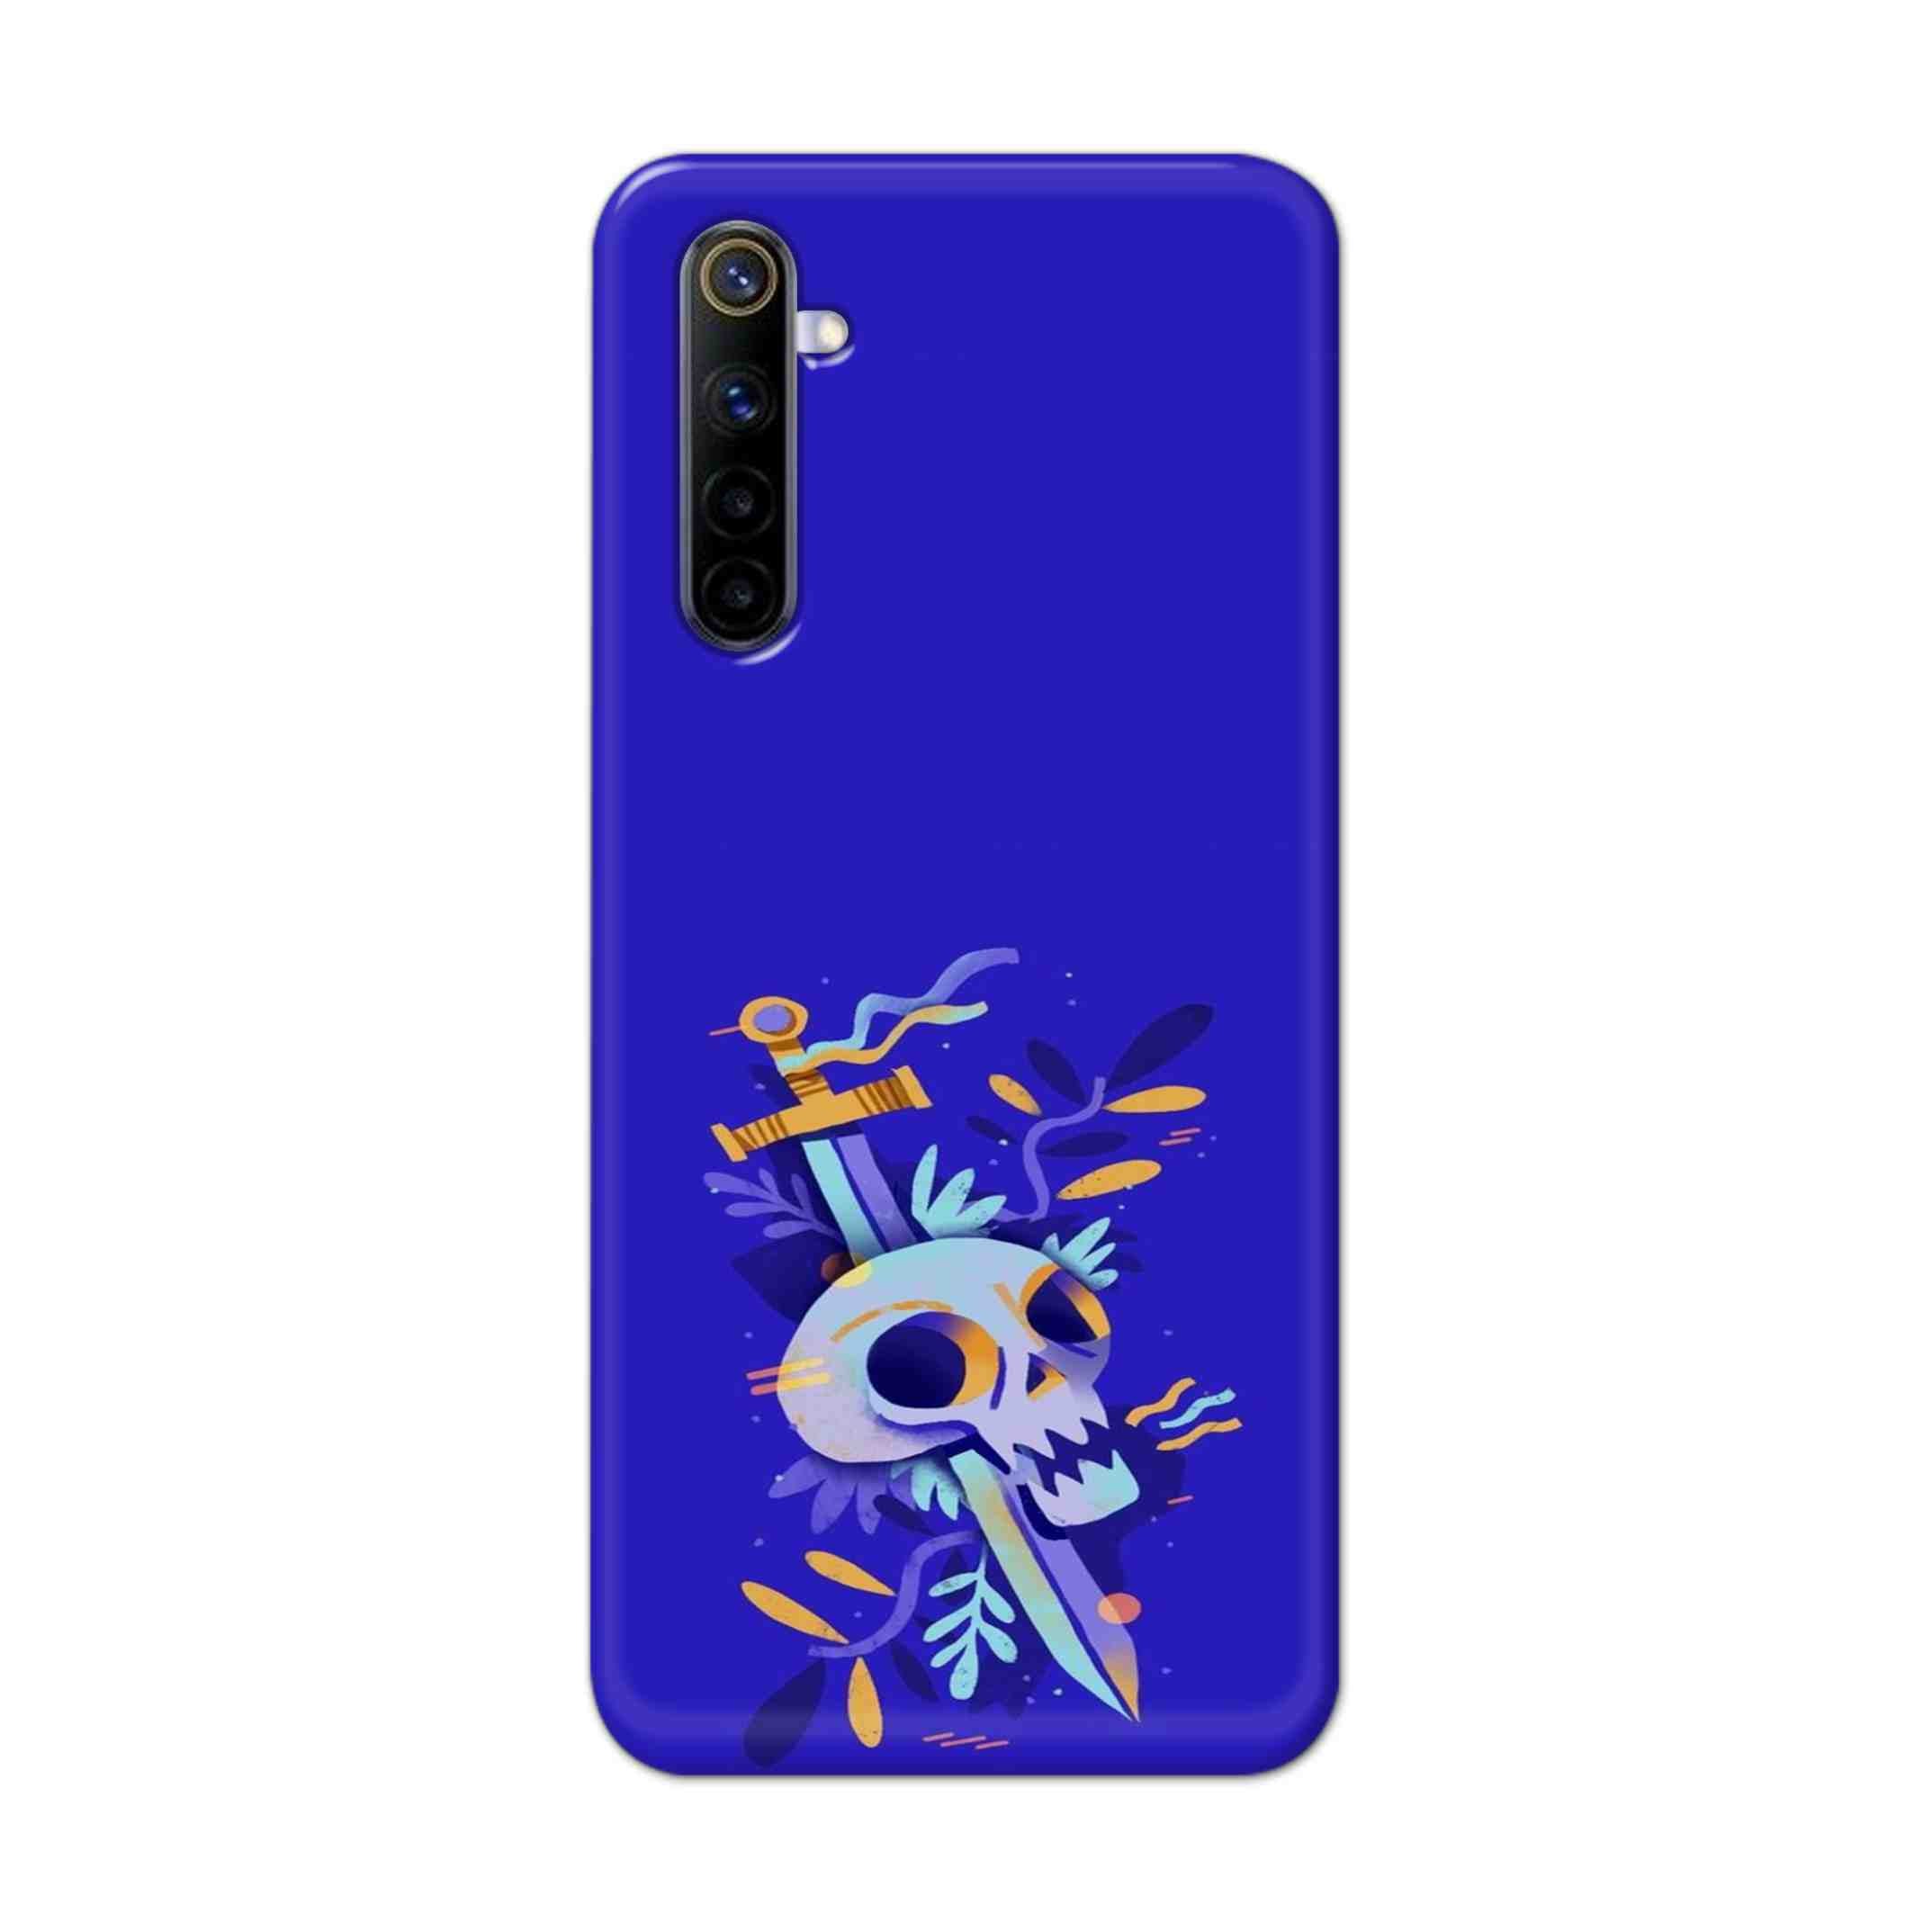 Buy Blue Skull Hard Back Mobile Phone Case Cover For REALME 6 PRO Online